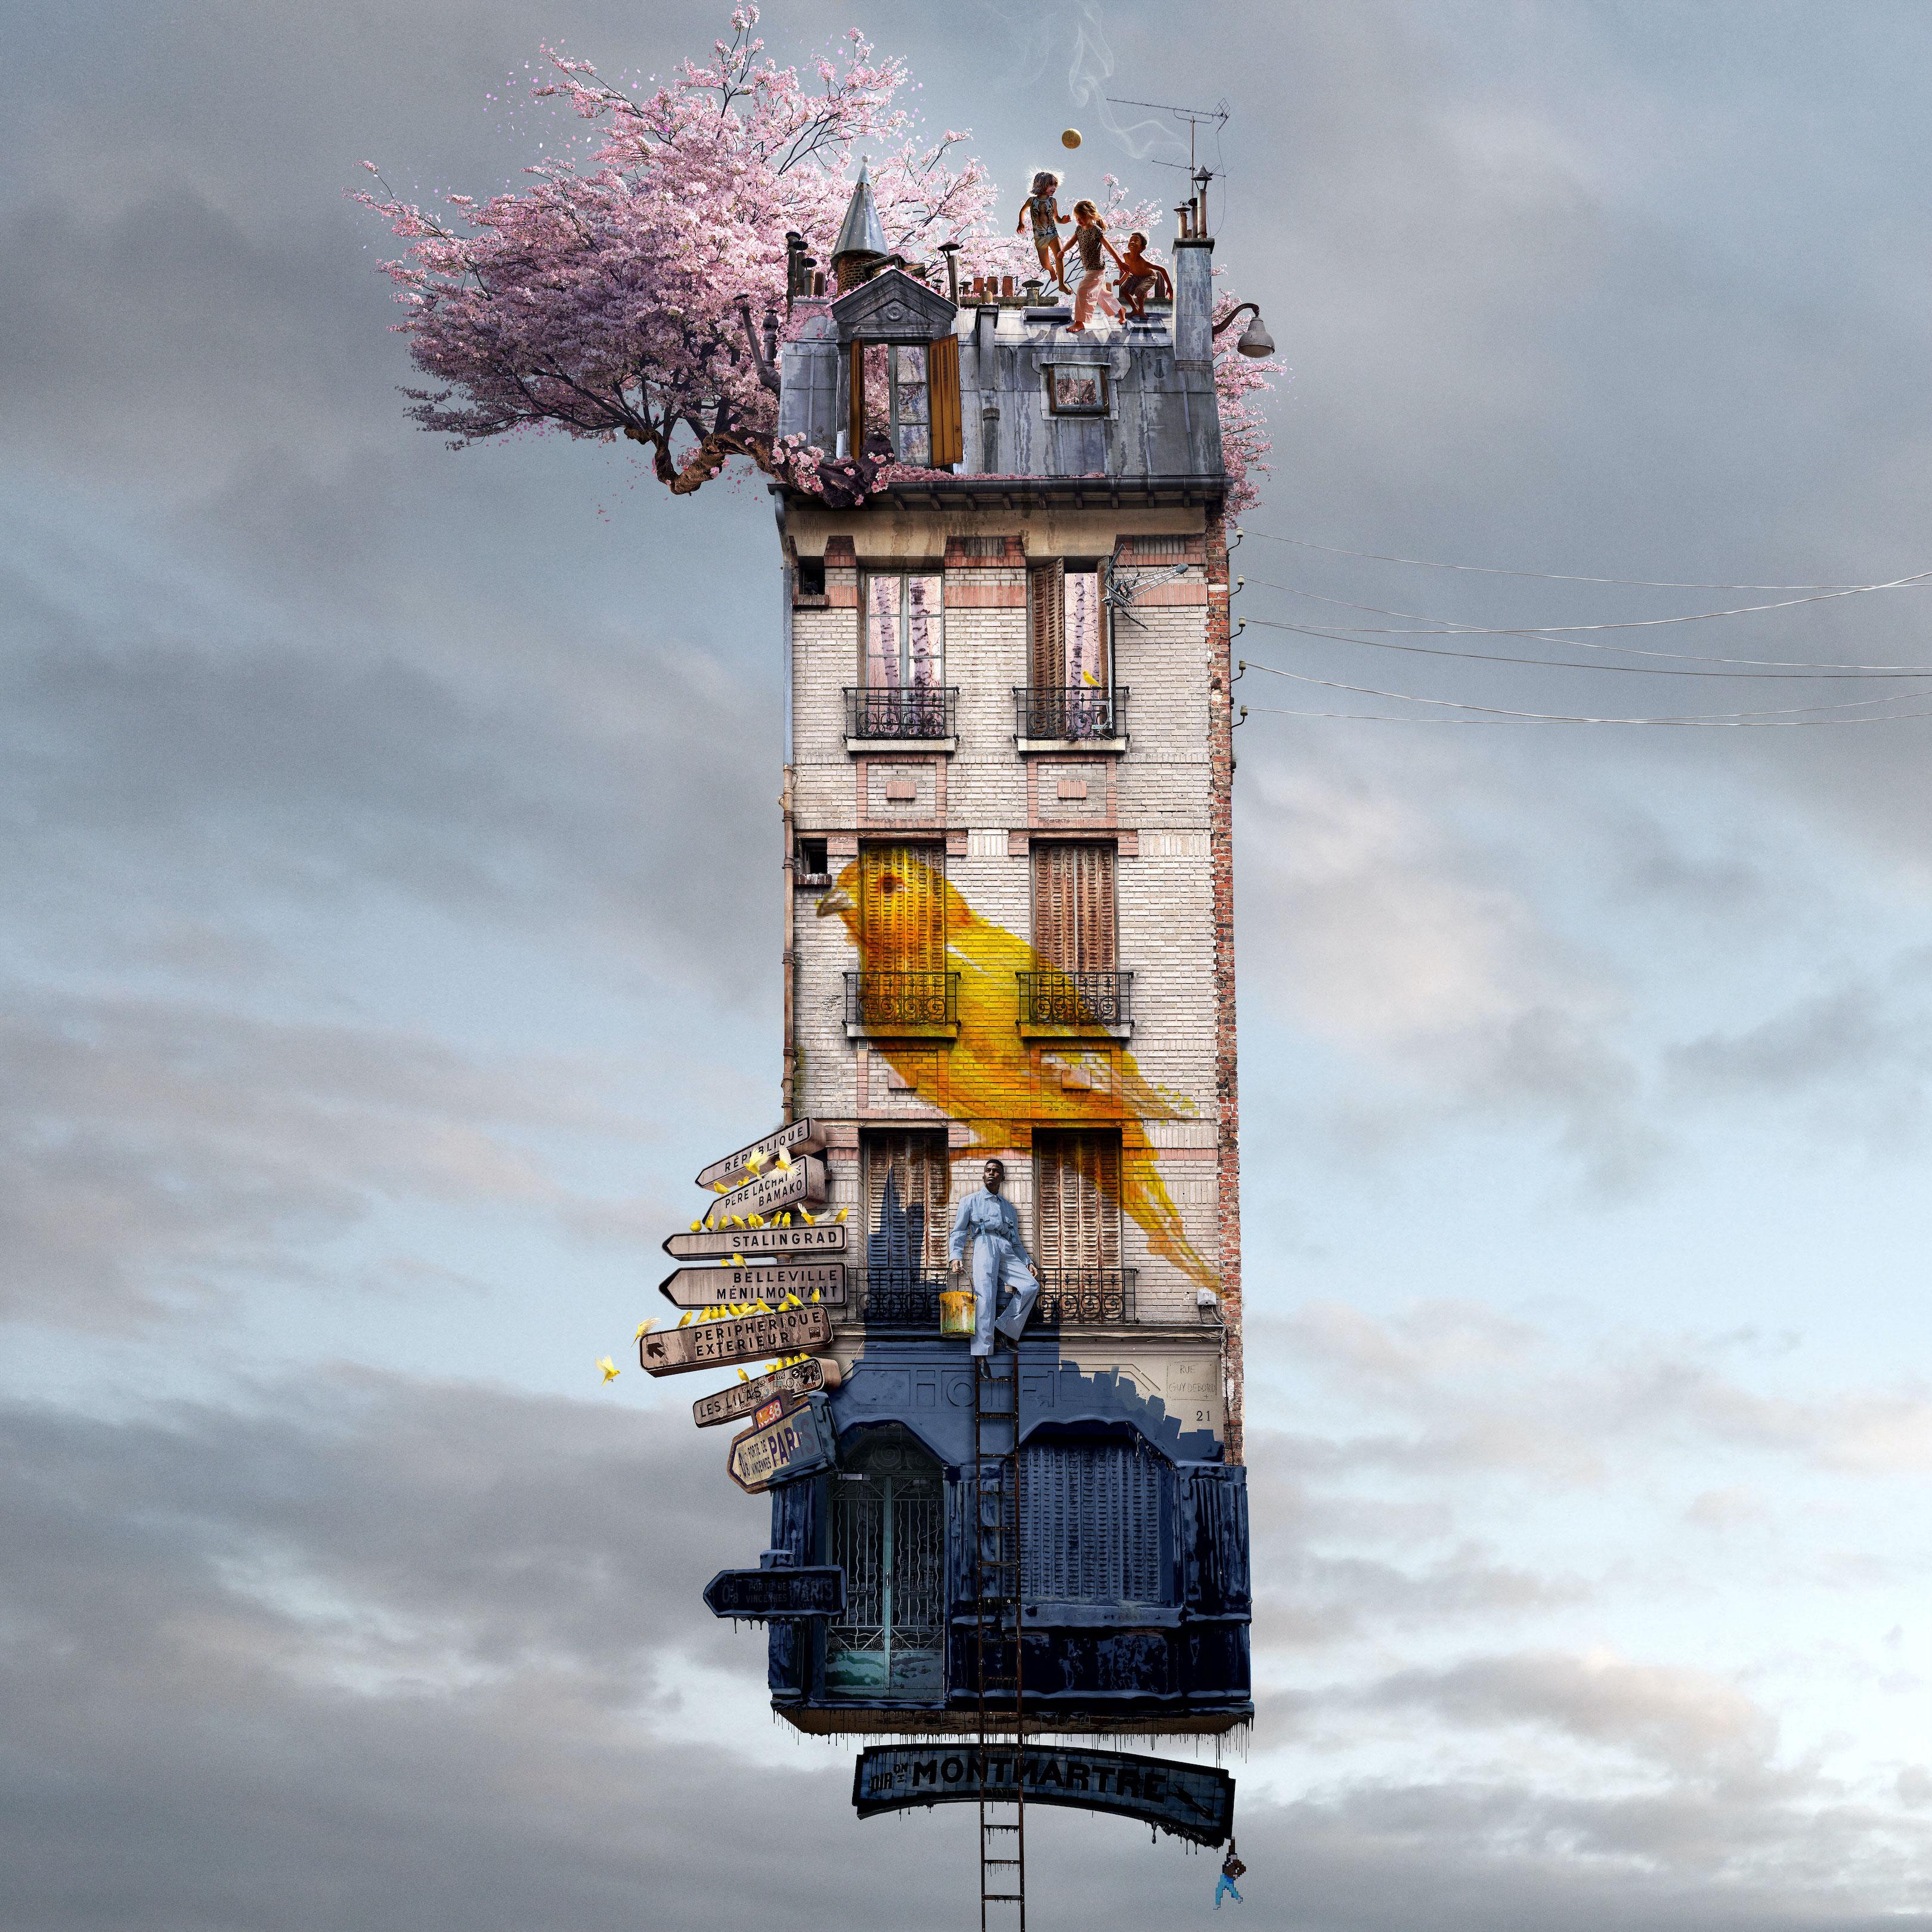 Laurent Chéhère Color Photograph - 3 samourais - whimsical manipulated color photograph of a flying Parisian house